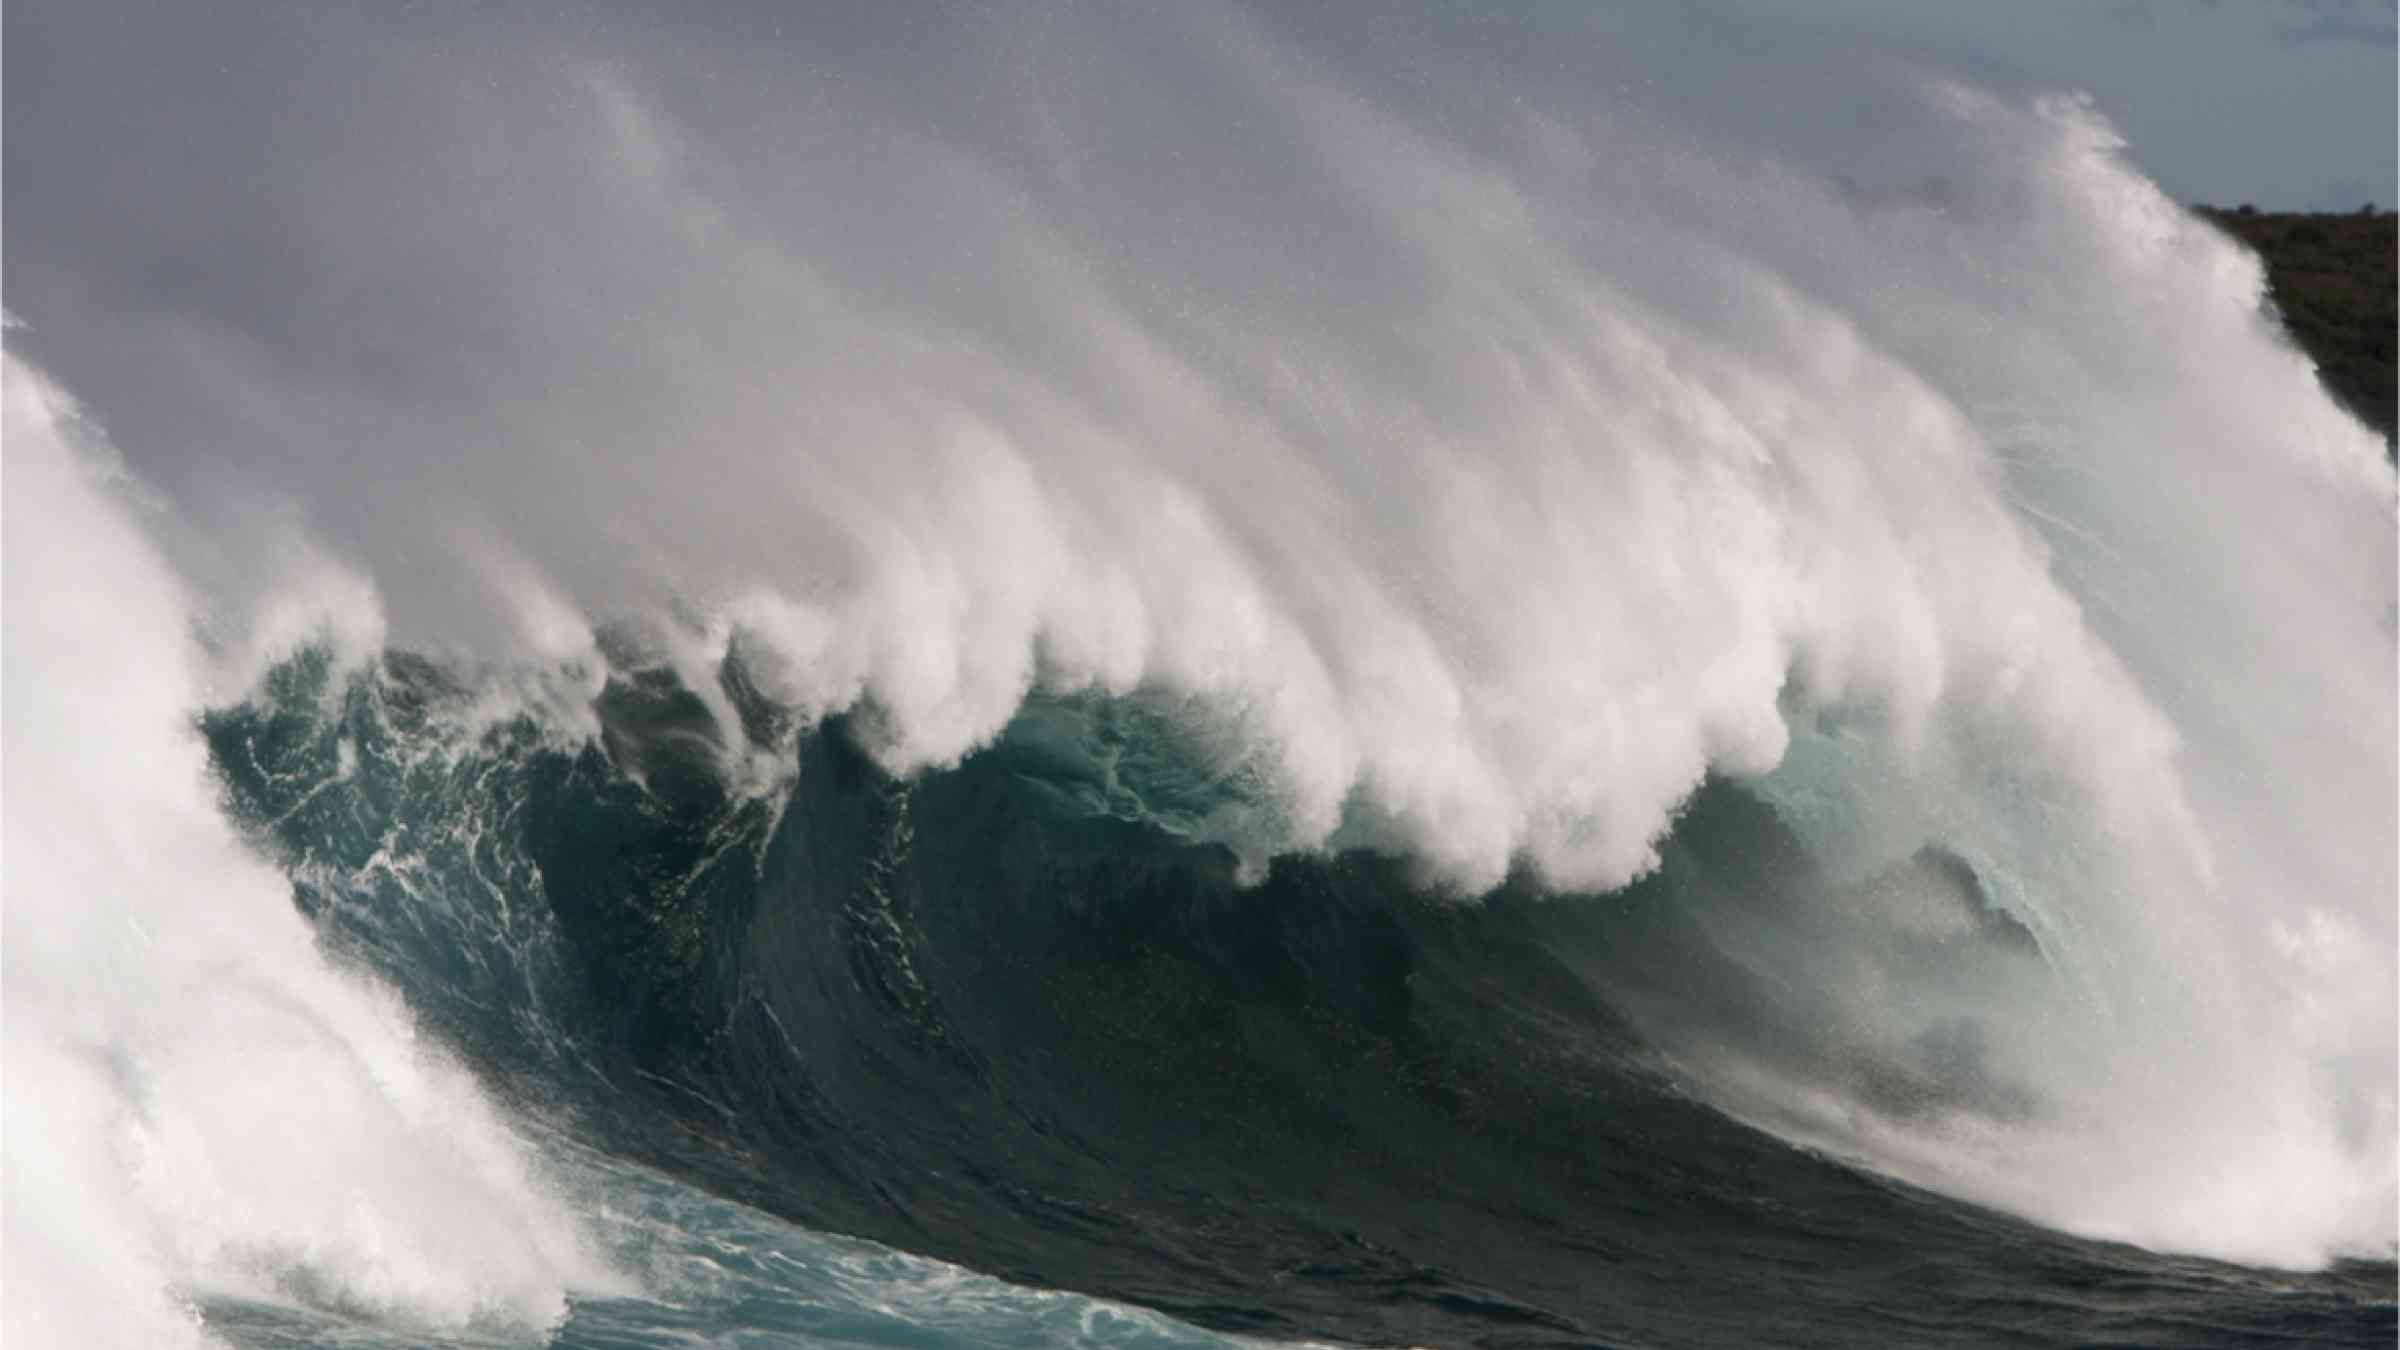 A large wave crests off the coast of Sydney, Australia